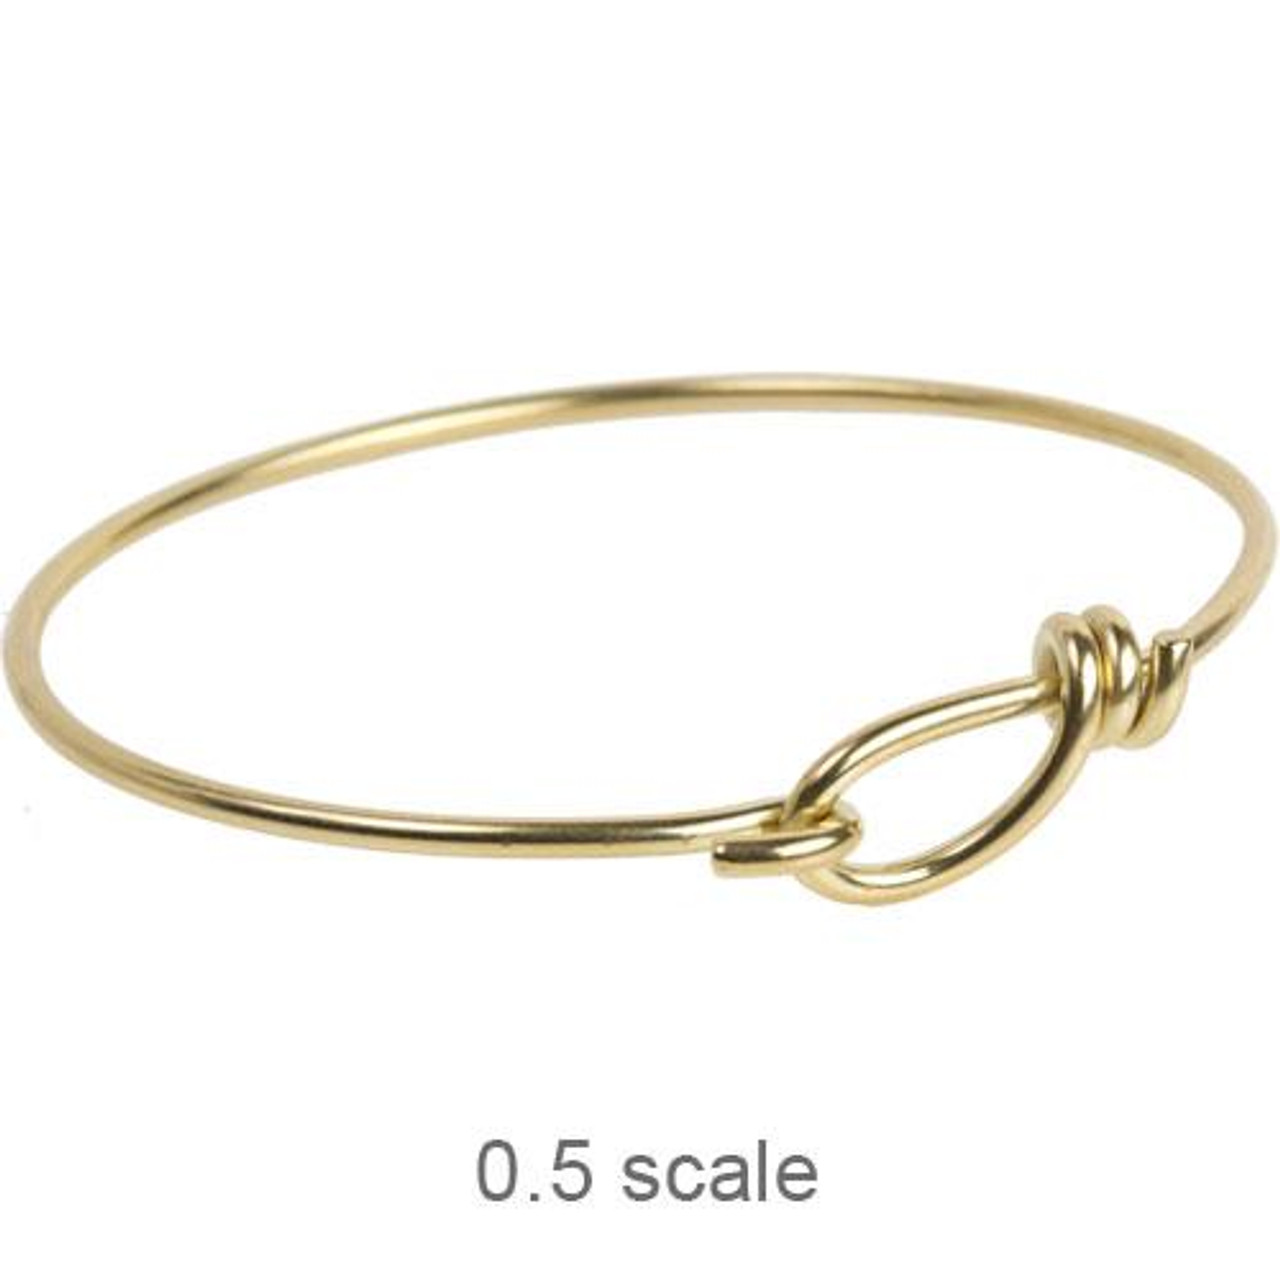 Wire Bracelet with hook opening in 12 gauge wire, Bright Brass, 5 per Pack  - TierraCast, Inc.